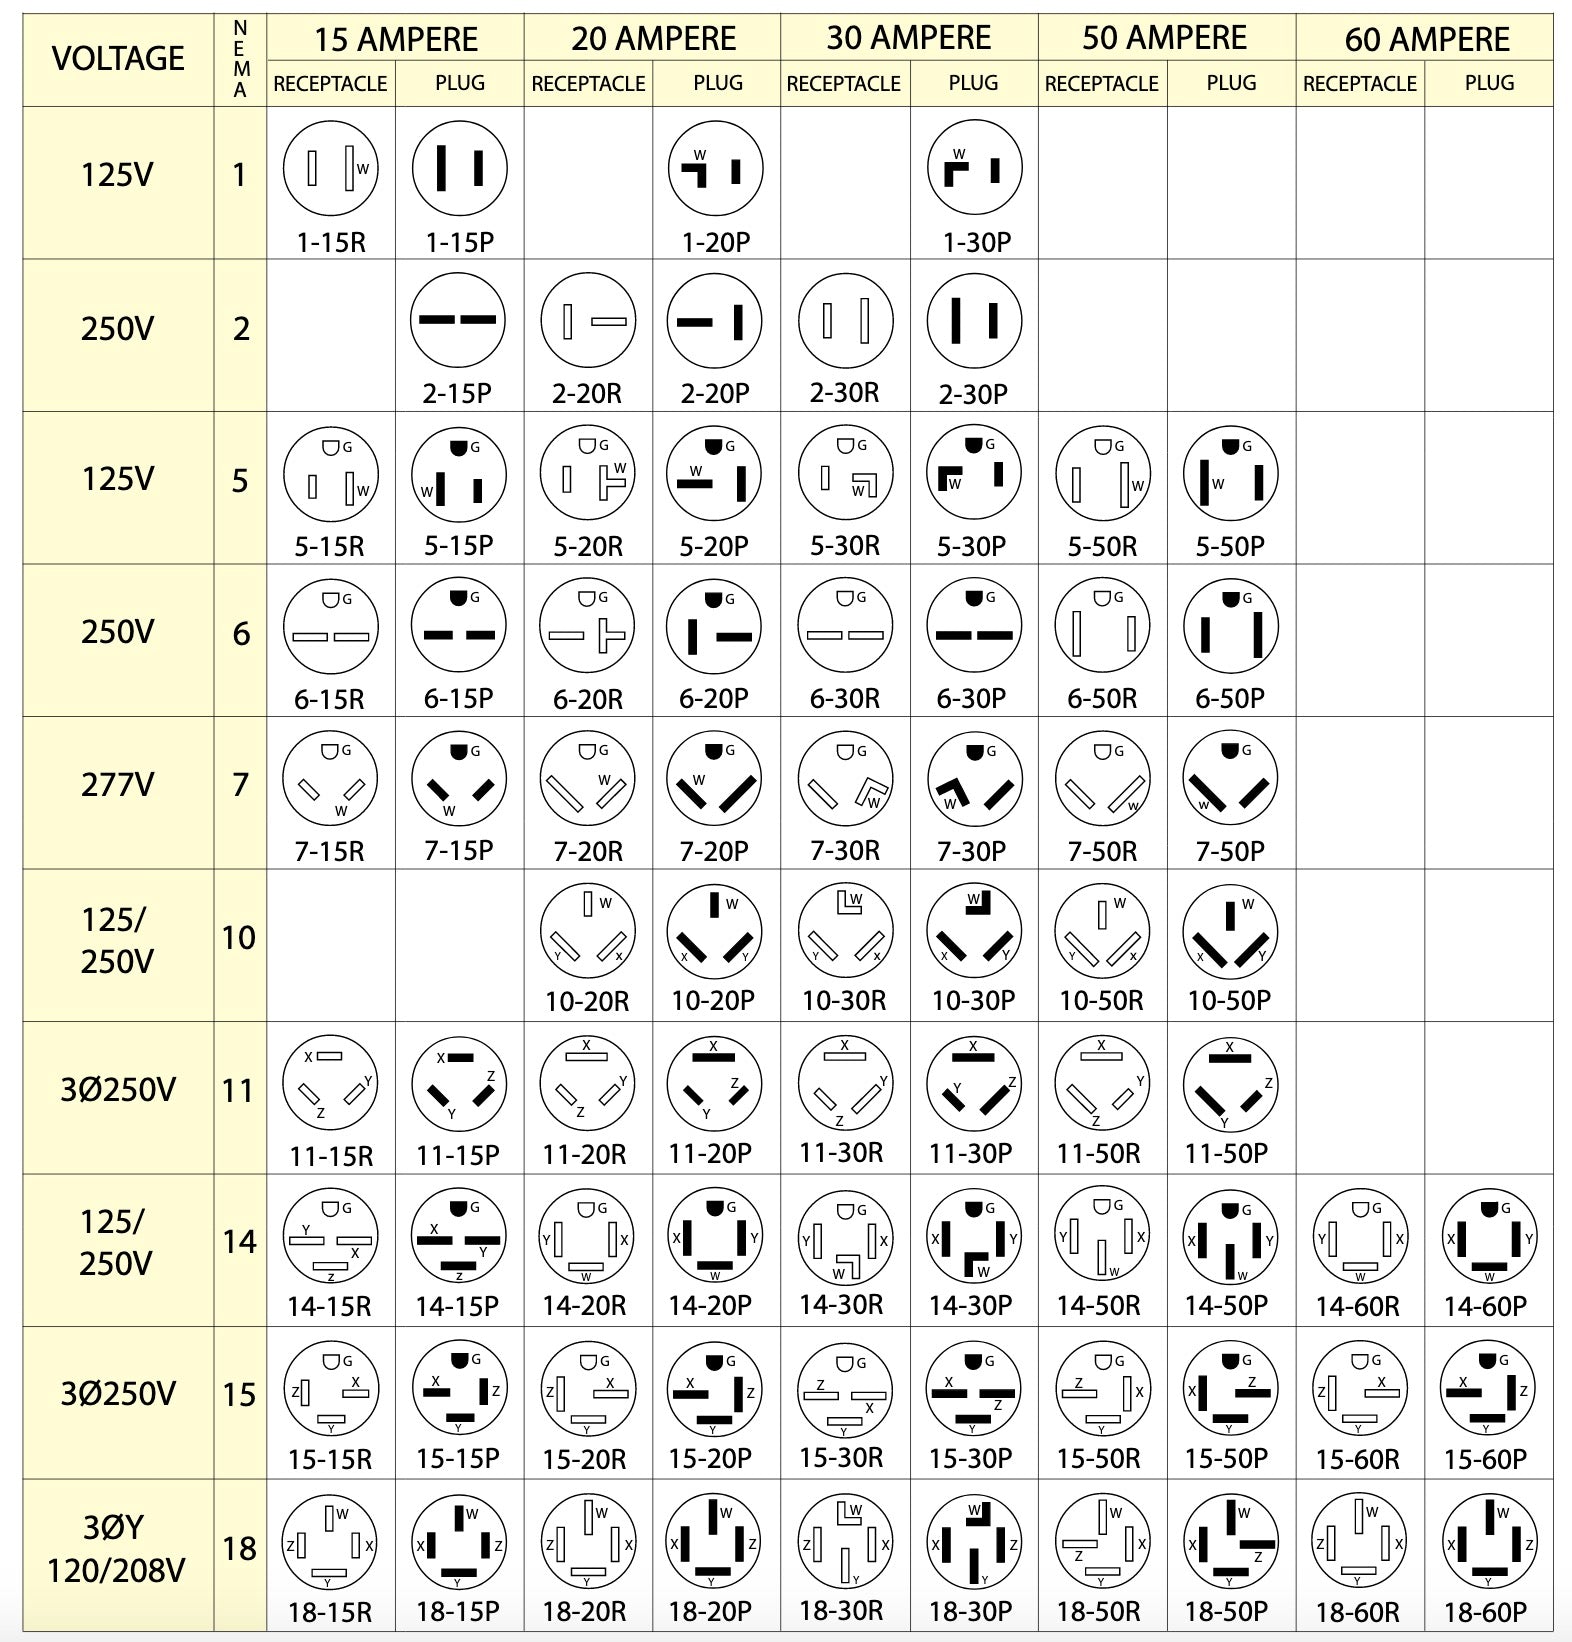 NEMA Plug Configuration Chart - Voltage & Amperage